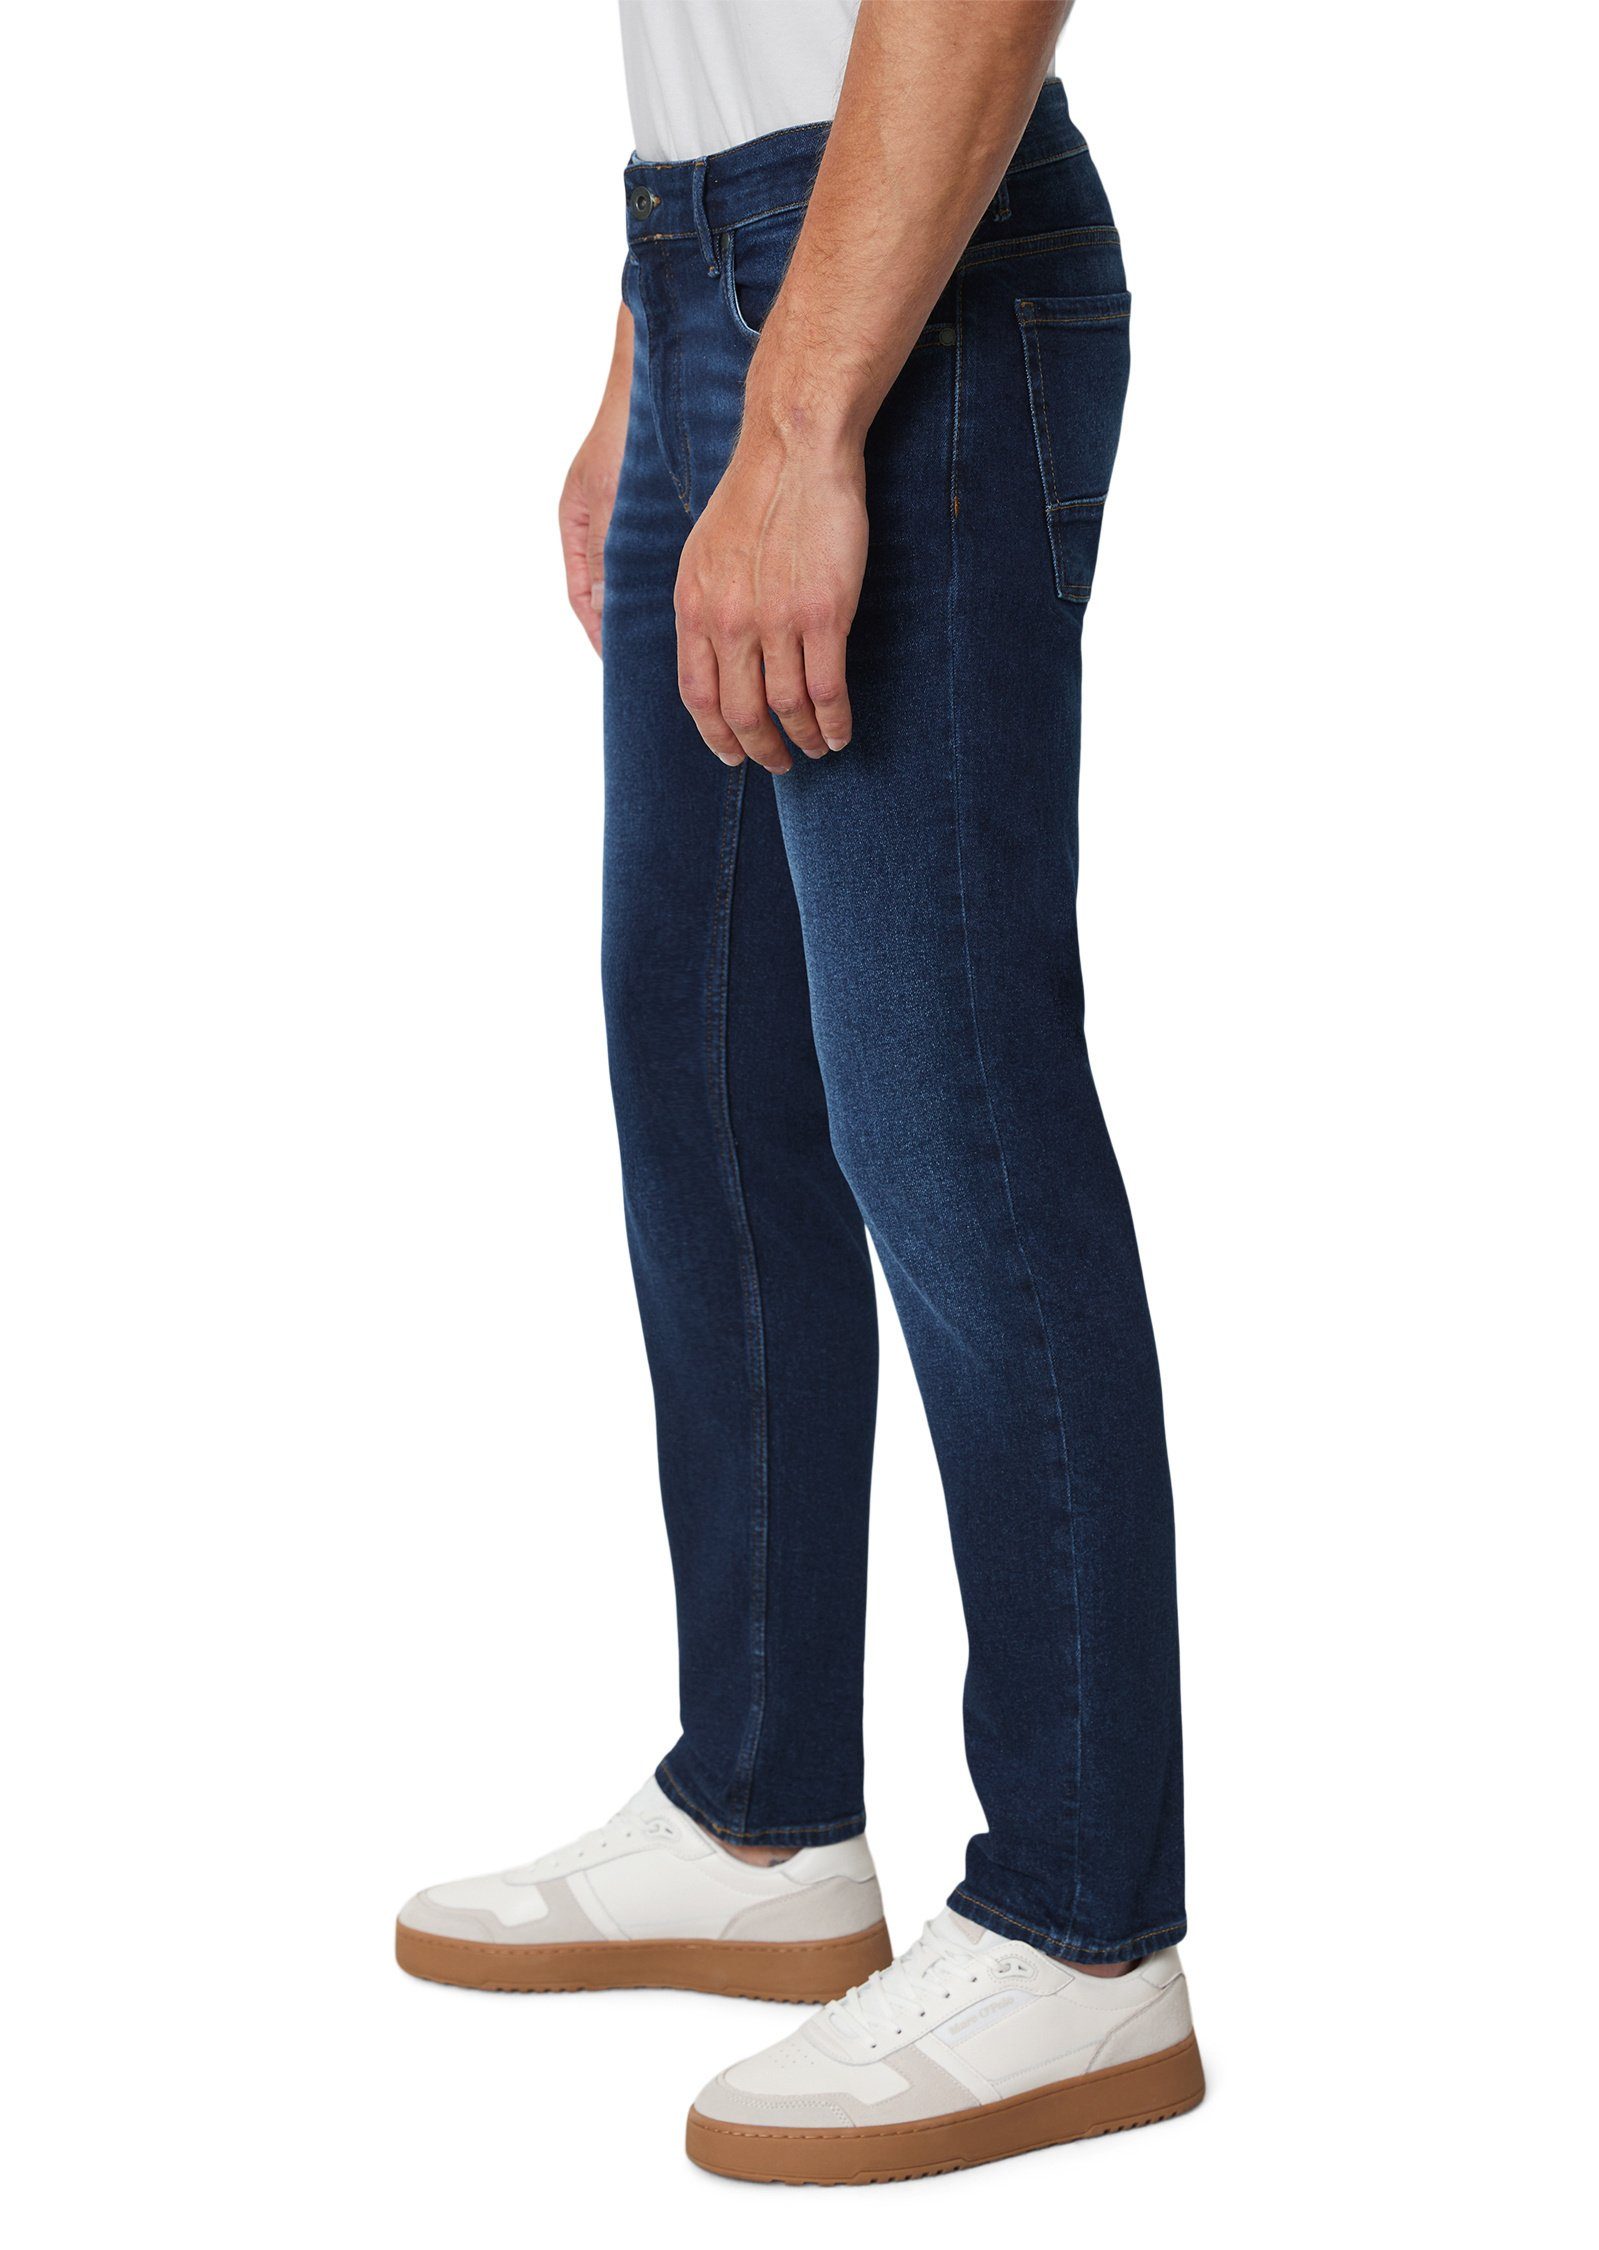 Marc O'Polo 5-Pocket-Jeans Bio-Baumwolle-Mix aus dunkelblau